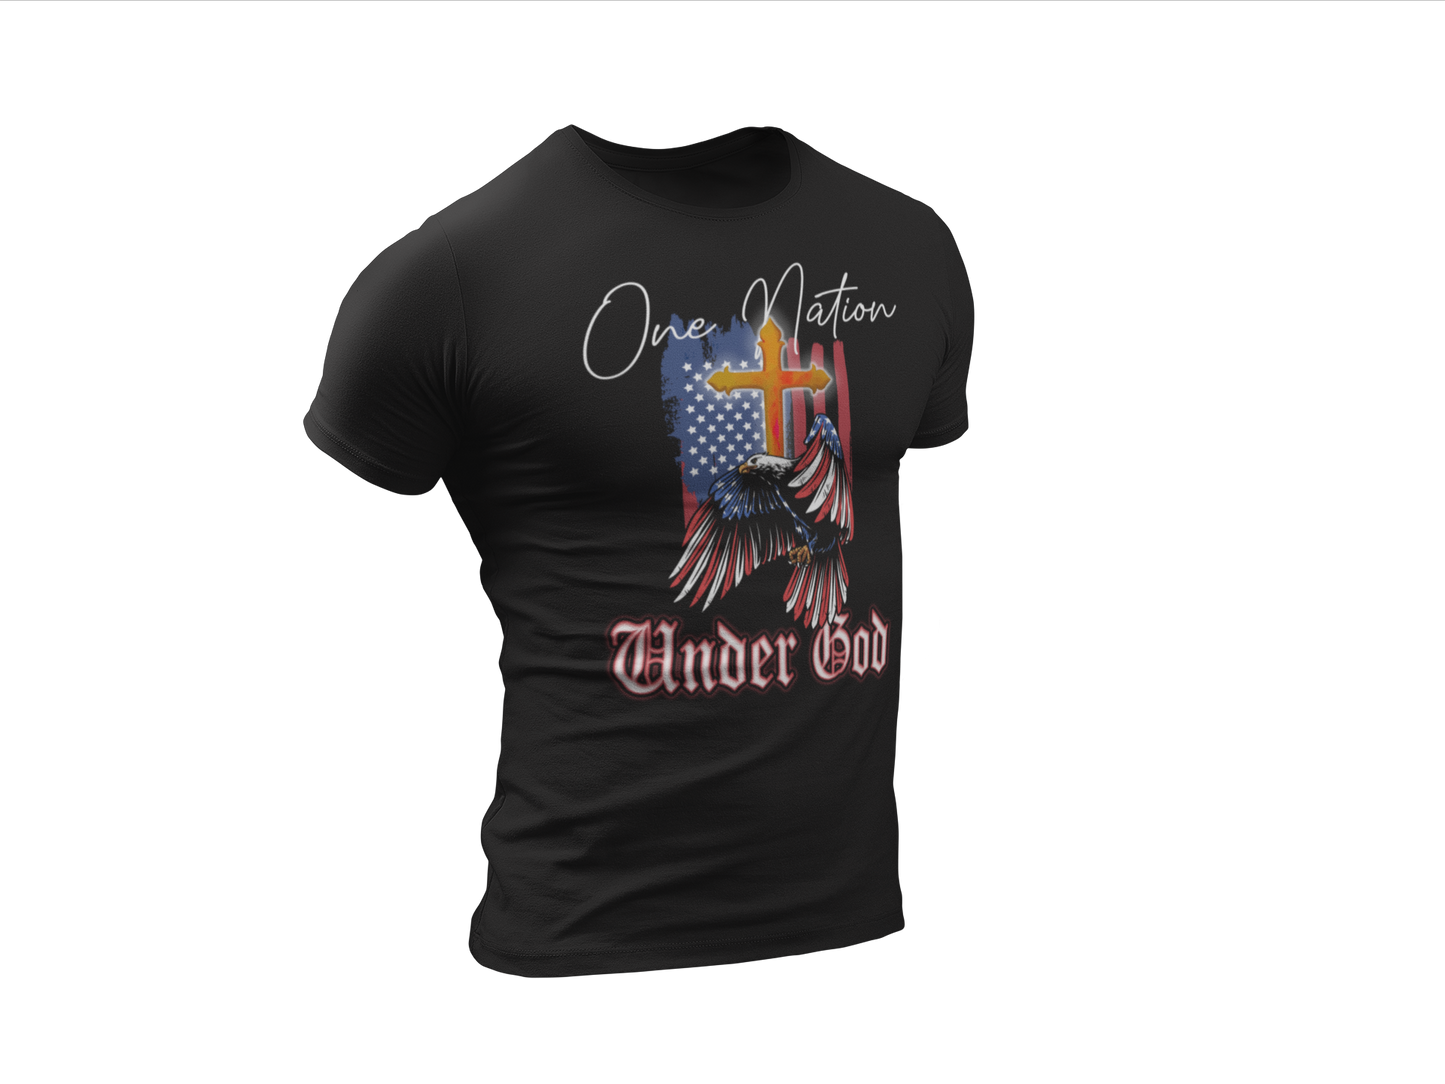 One Nation Under God...